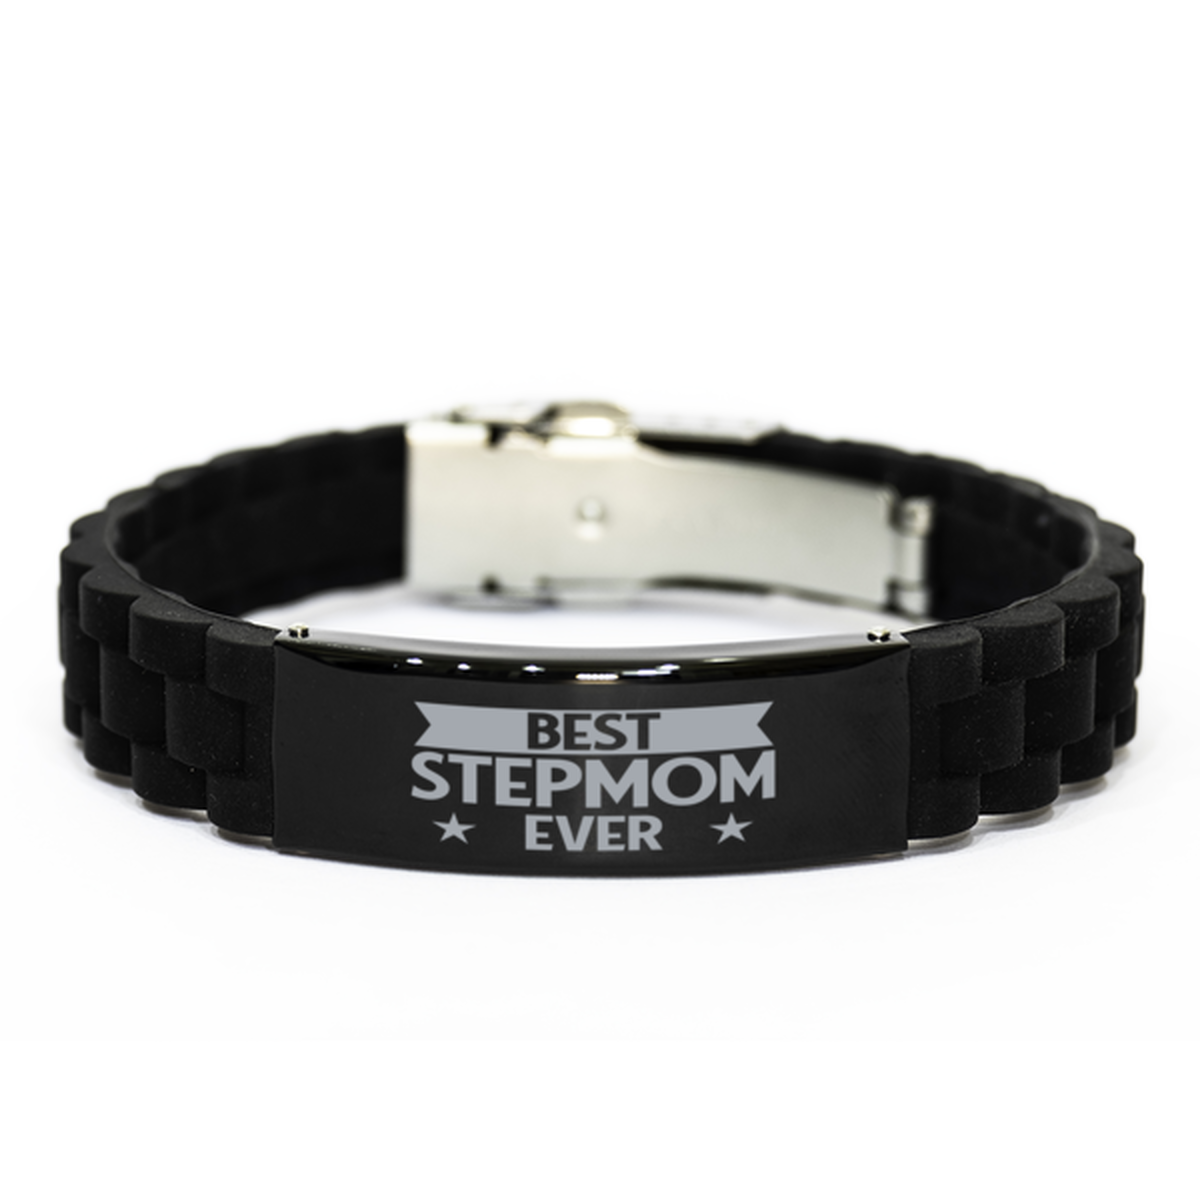 Best Stepmom Ever Stepmom Gifts, Funny Black Engraved Bracelet For Stepmom, Family Gifts For Women